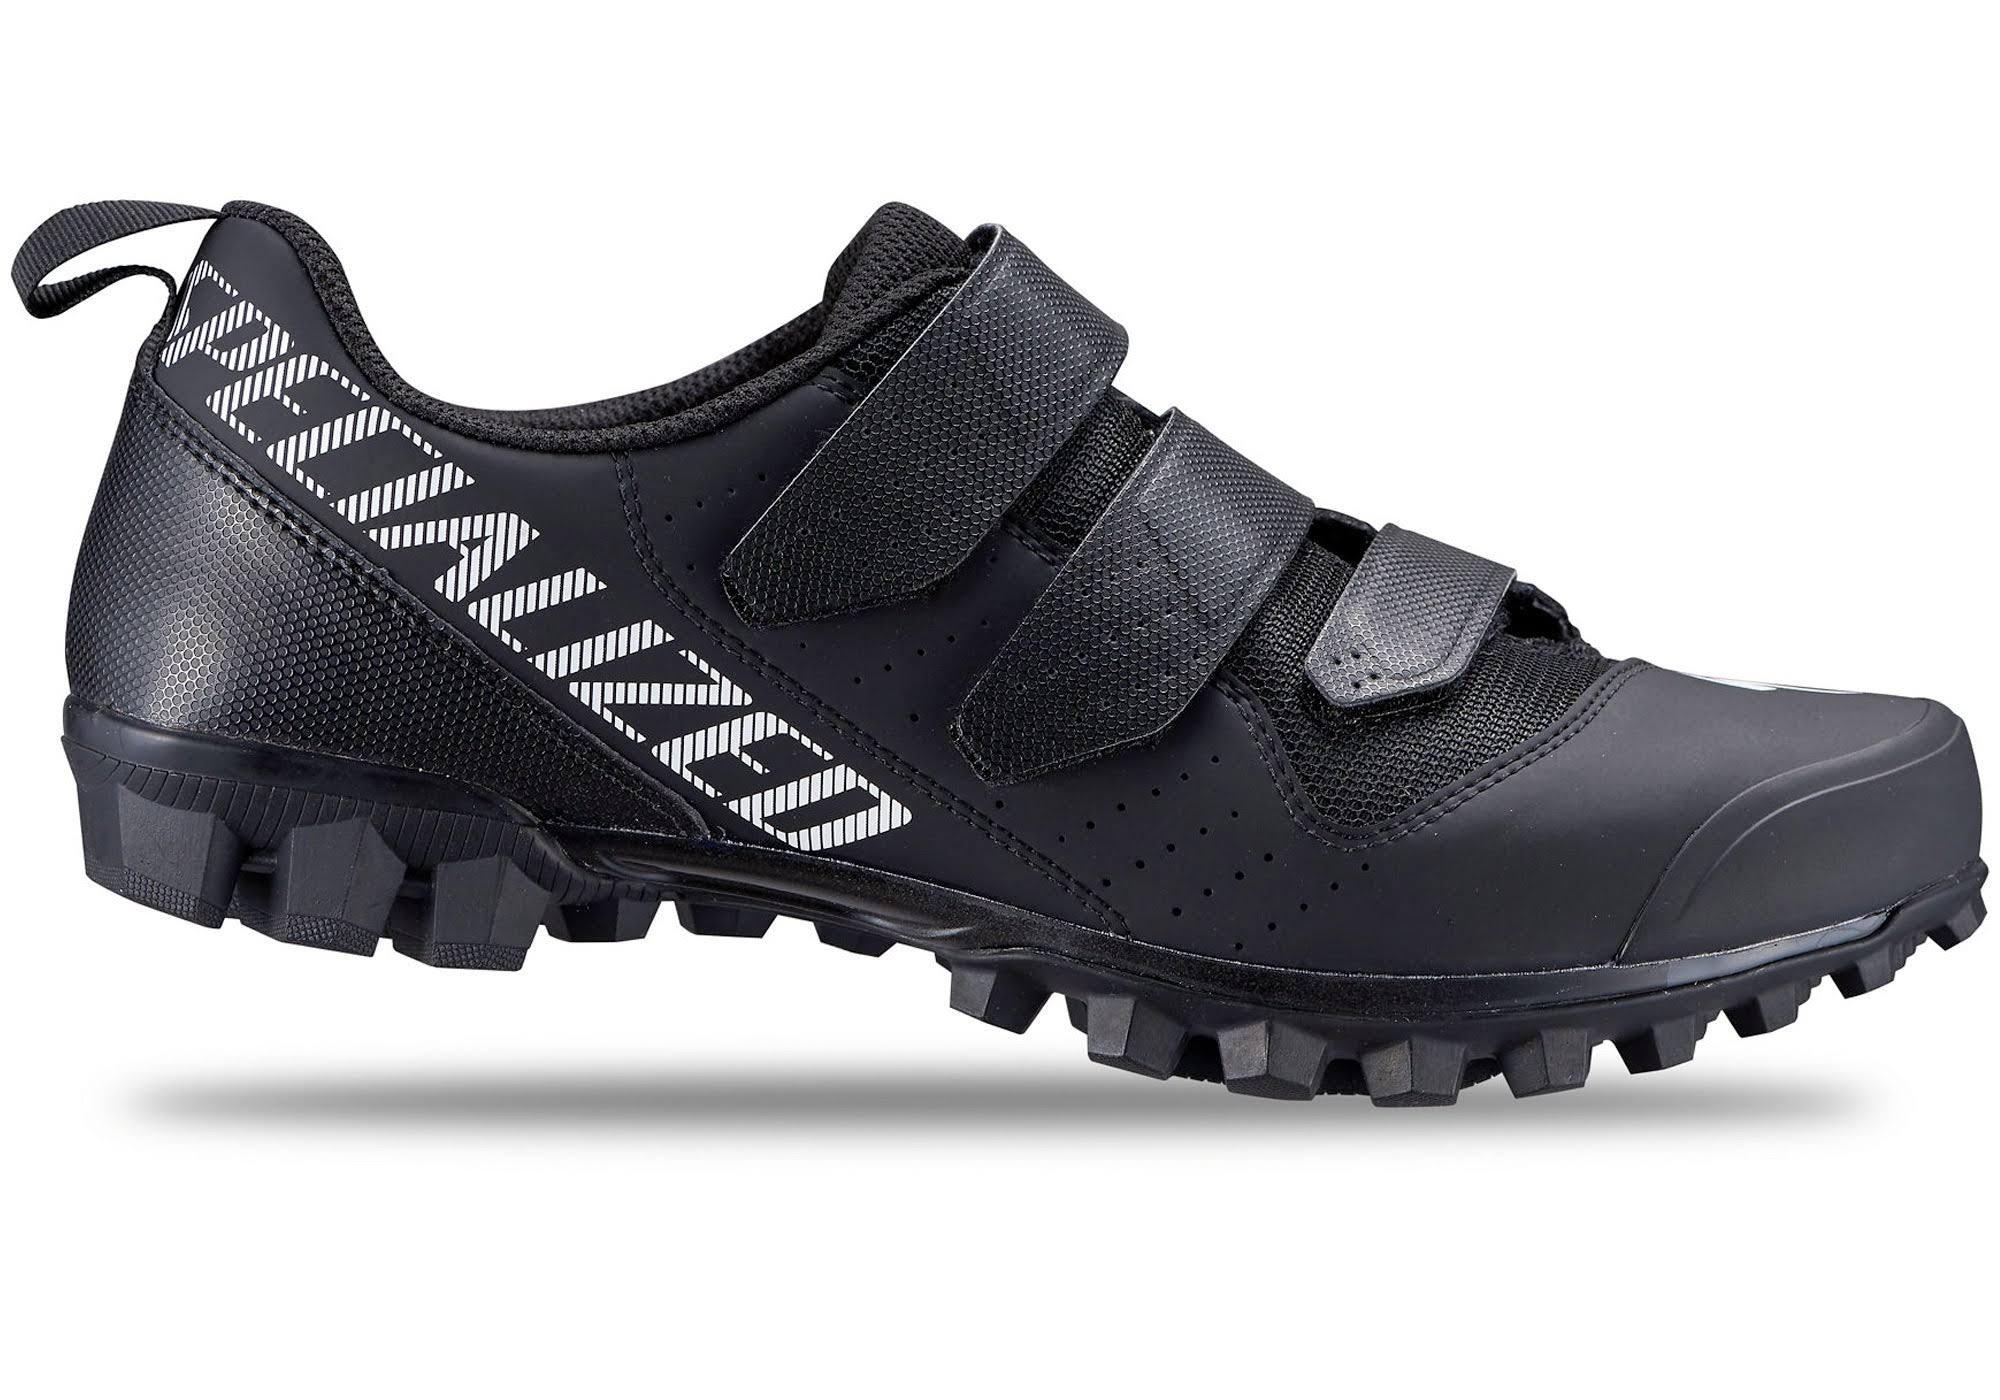 Specialized Recon 2.0 Mountain Bike Shoes (Colour: Black, Size: 46)